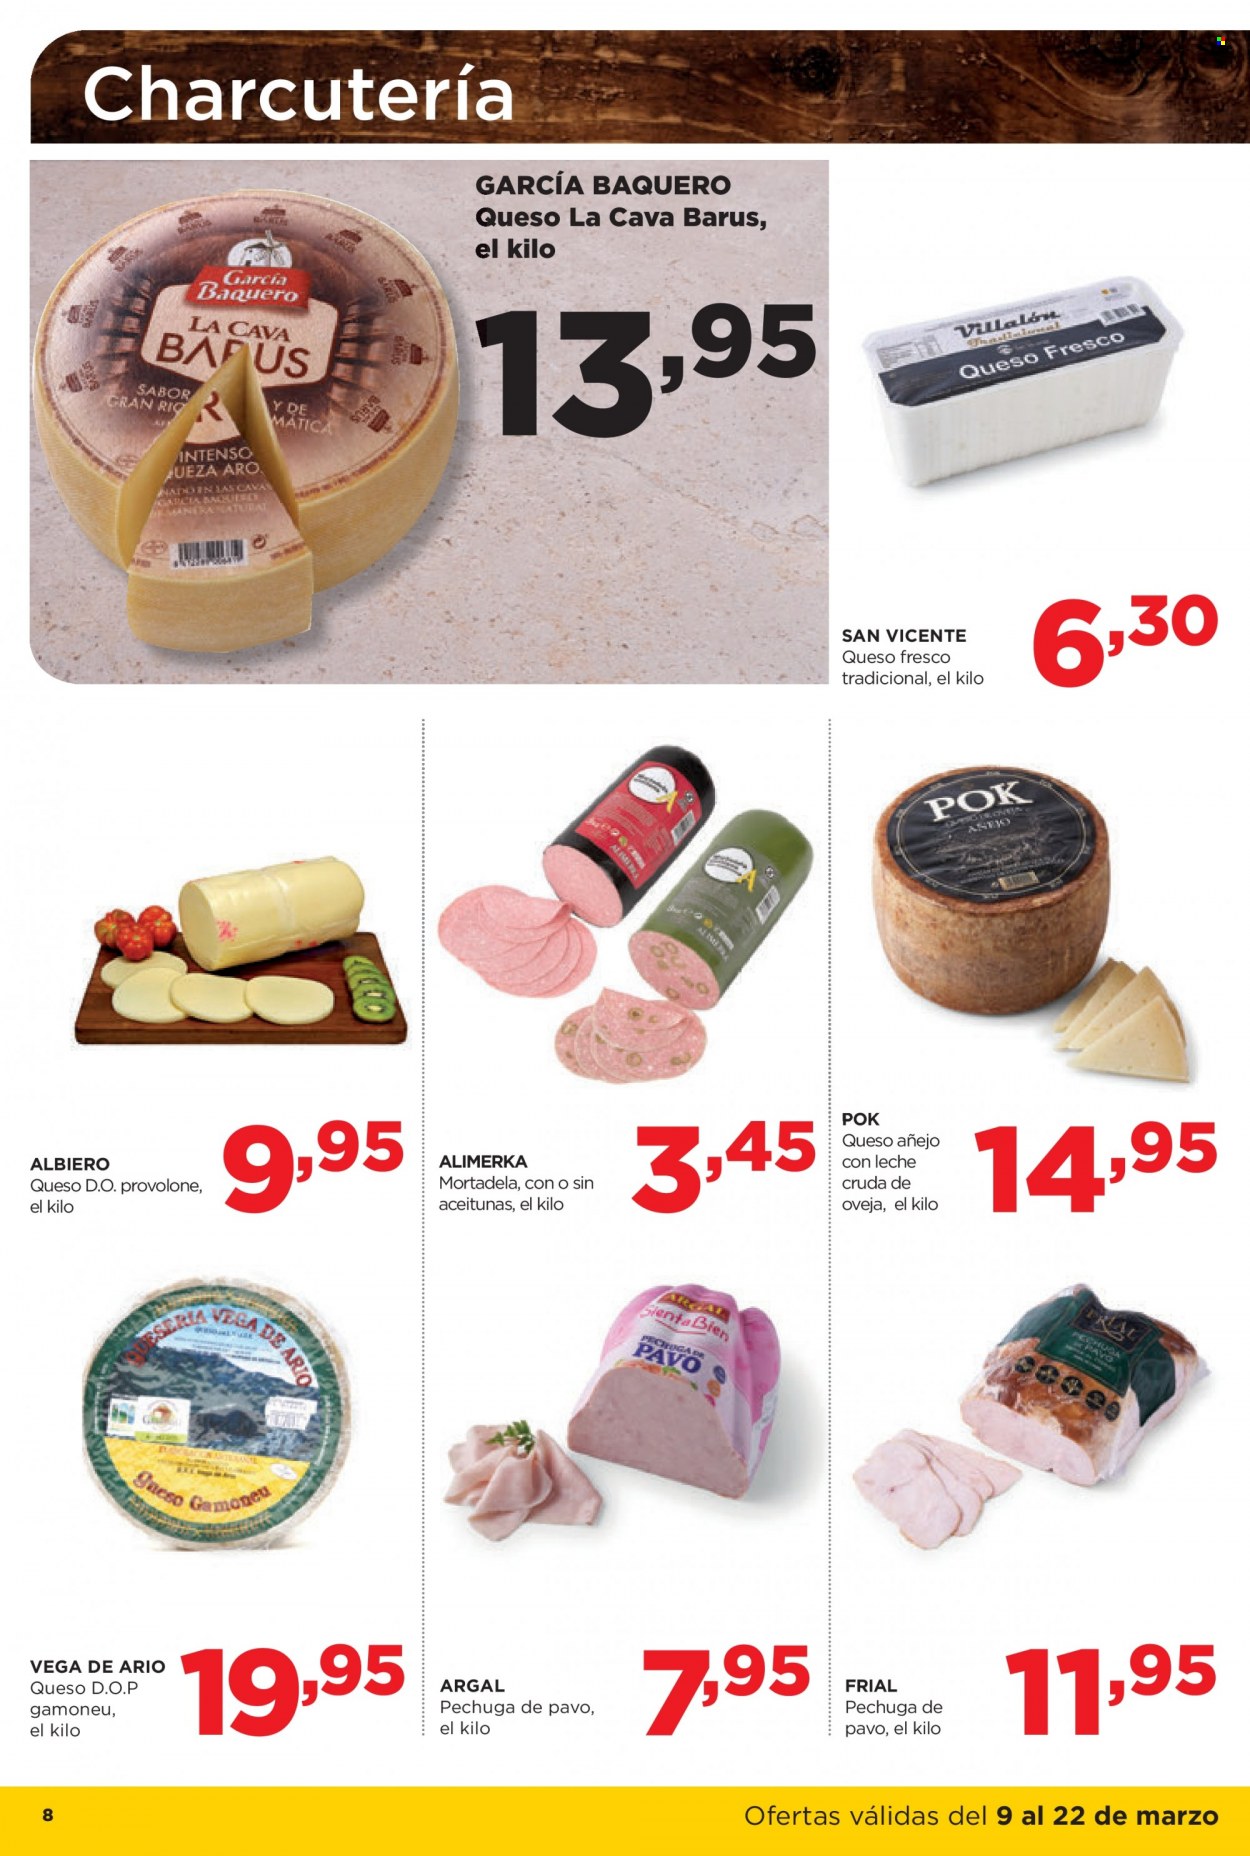 thumbnail - Folleto actual Alimerka - 09/03/23 - 22/03/23 - Ventas - Provolone, queso, mortadela, Argal, pechuga de pavo, queso fresco, queso de oveja. Página 8.